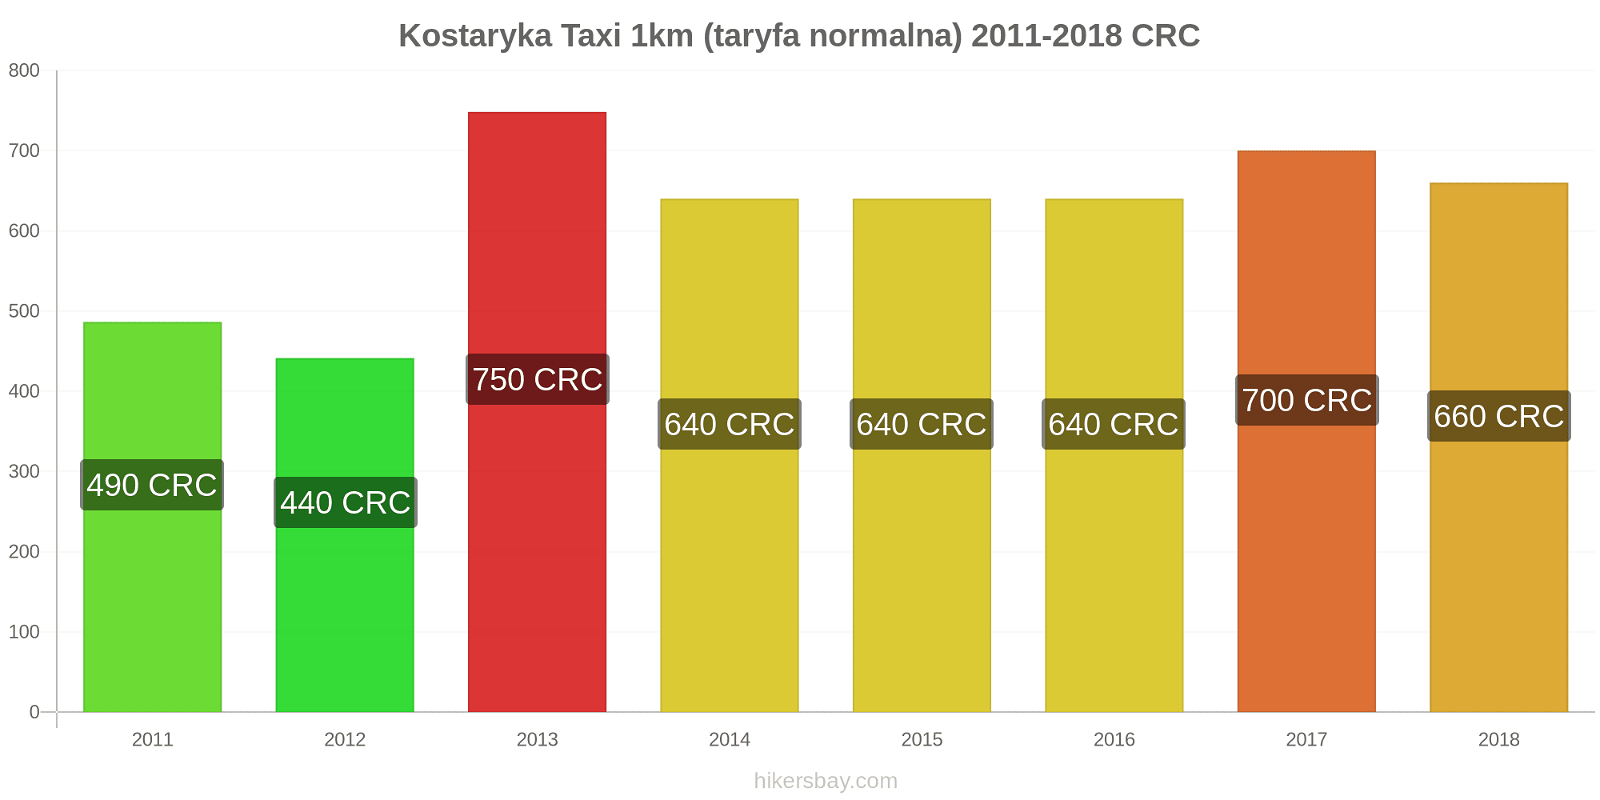 Kostaryka zmiany cen Taxi 1km (taryfa normalna) hikersbay.com